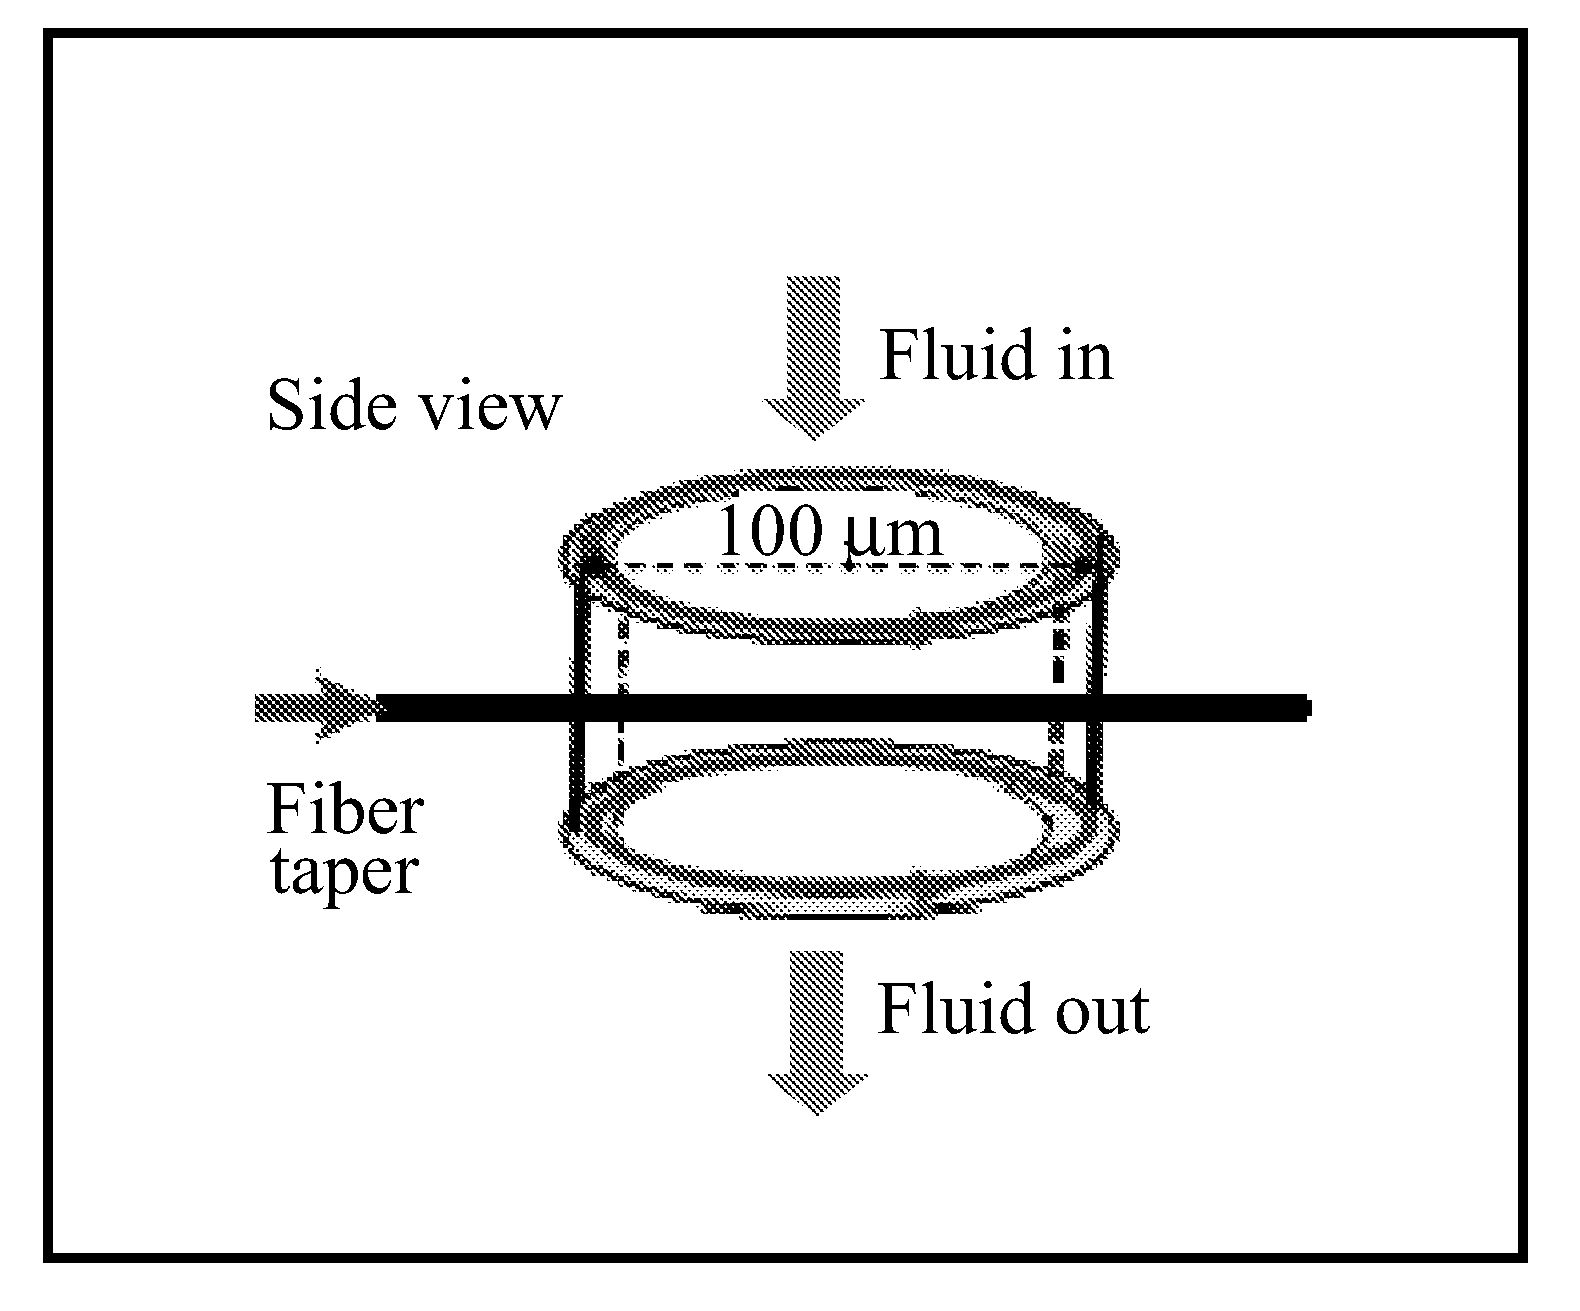 Hollow Core Optical Ring Resonator Sensor, Sensing Methods, and Methods of Fabrication